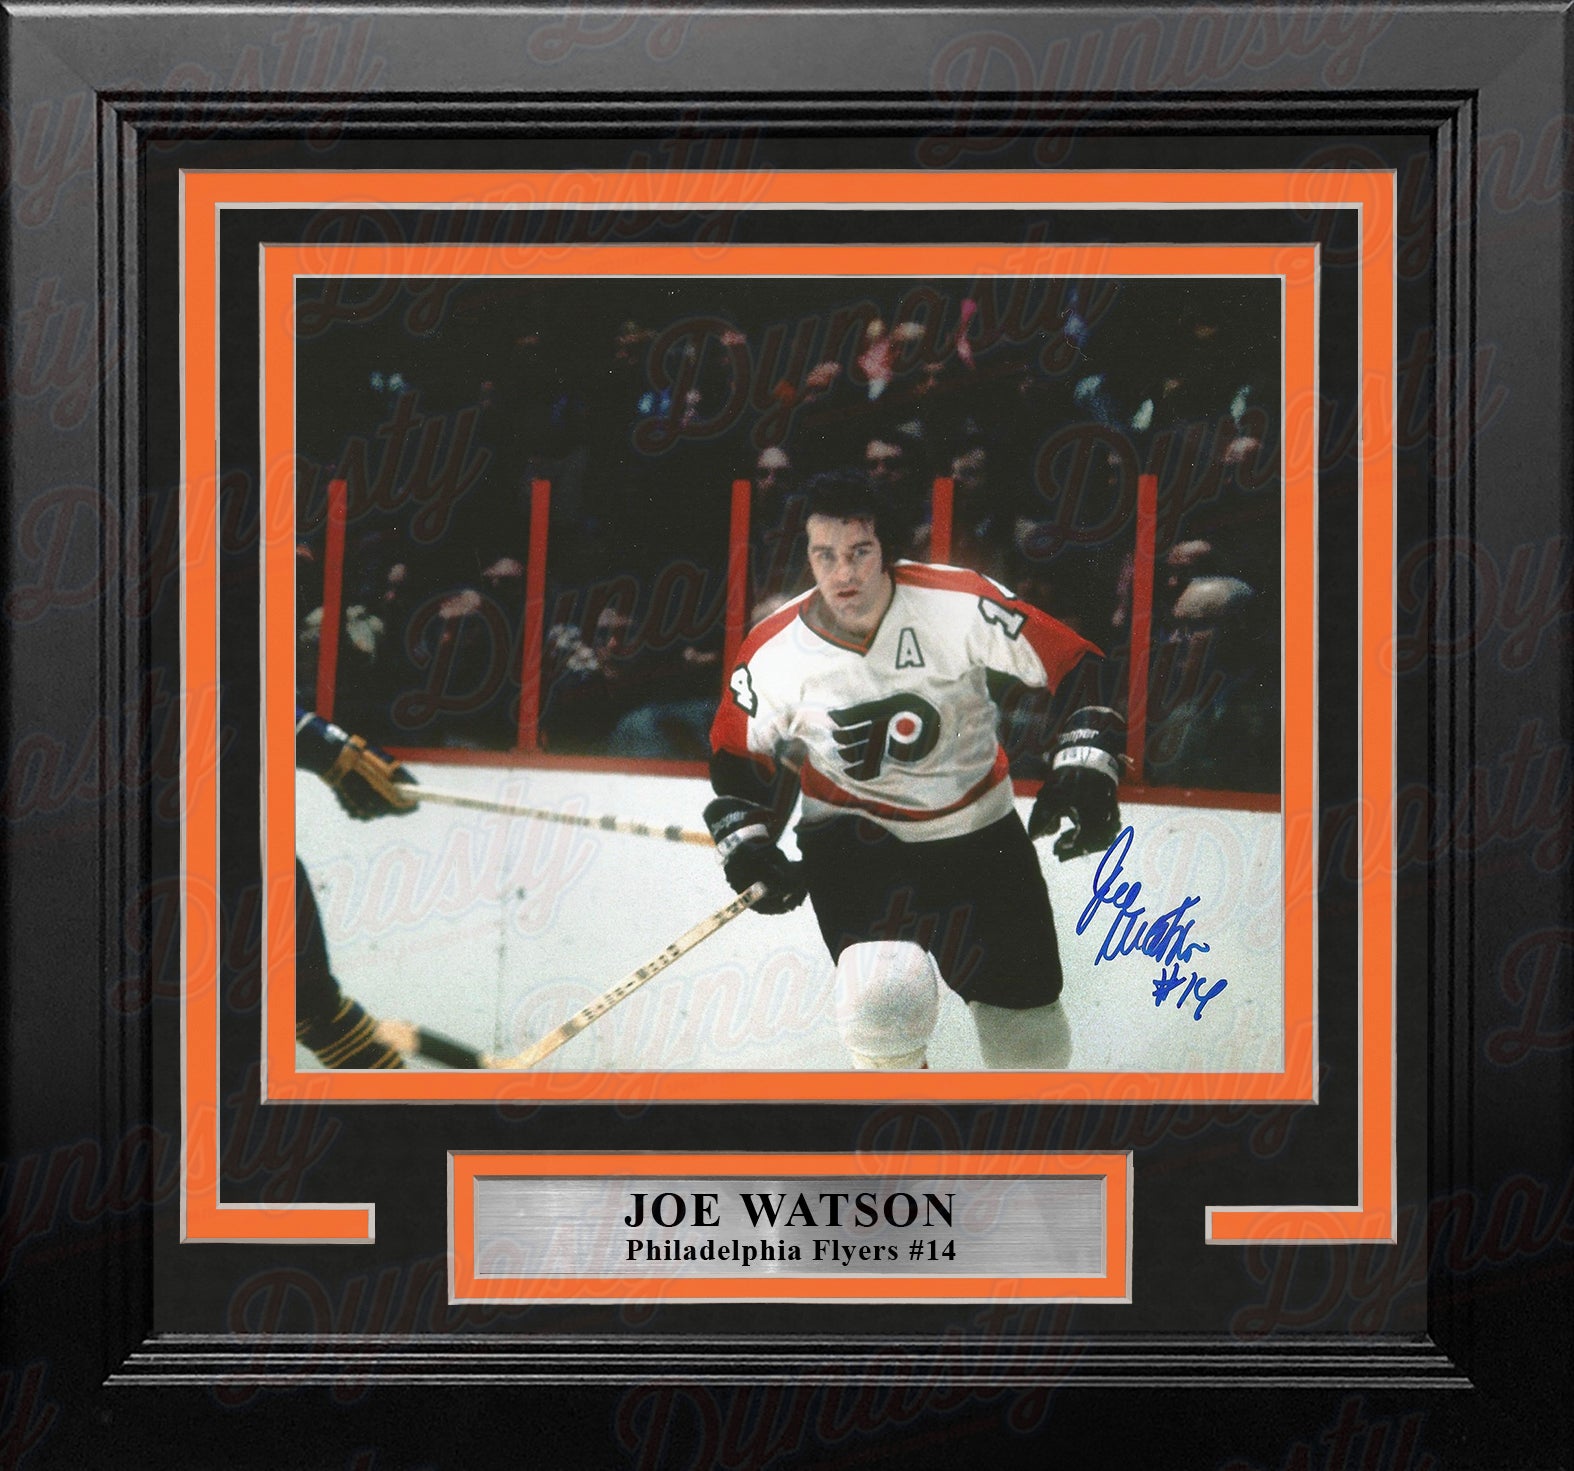 Joe Watson in Action Autographed Philadelphia Flyers 8" x 10" Framed Hockey Photo - Dynasty Sports & Framing 